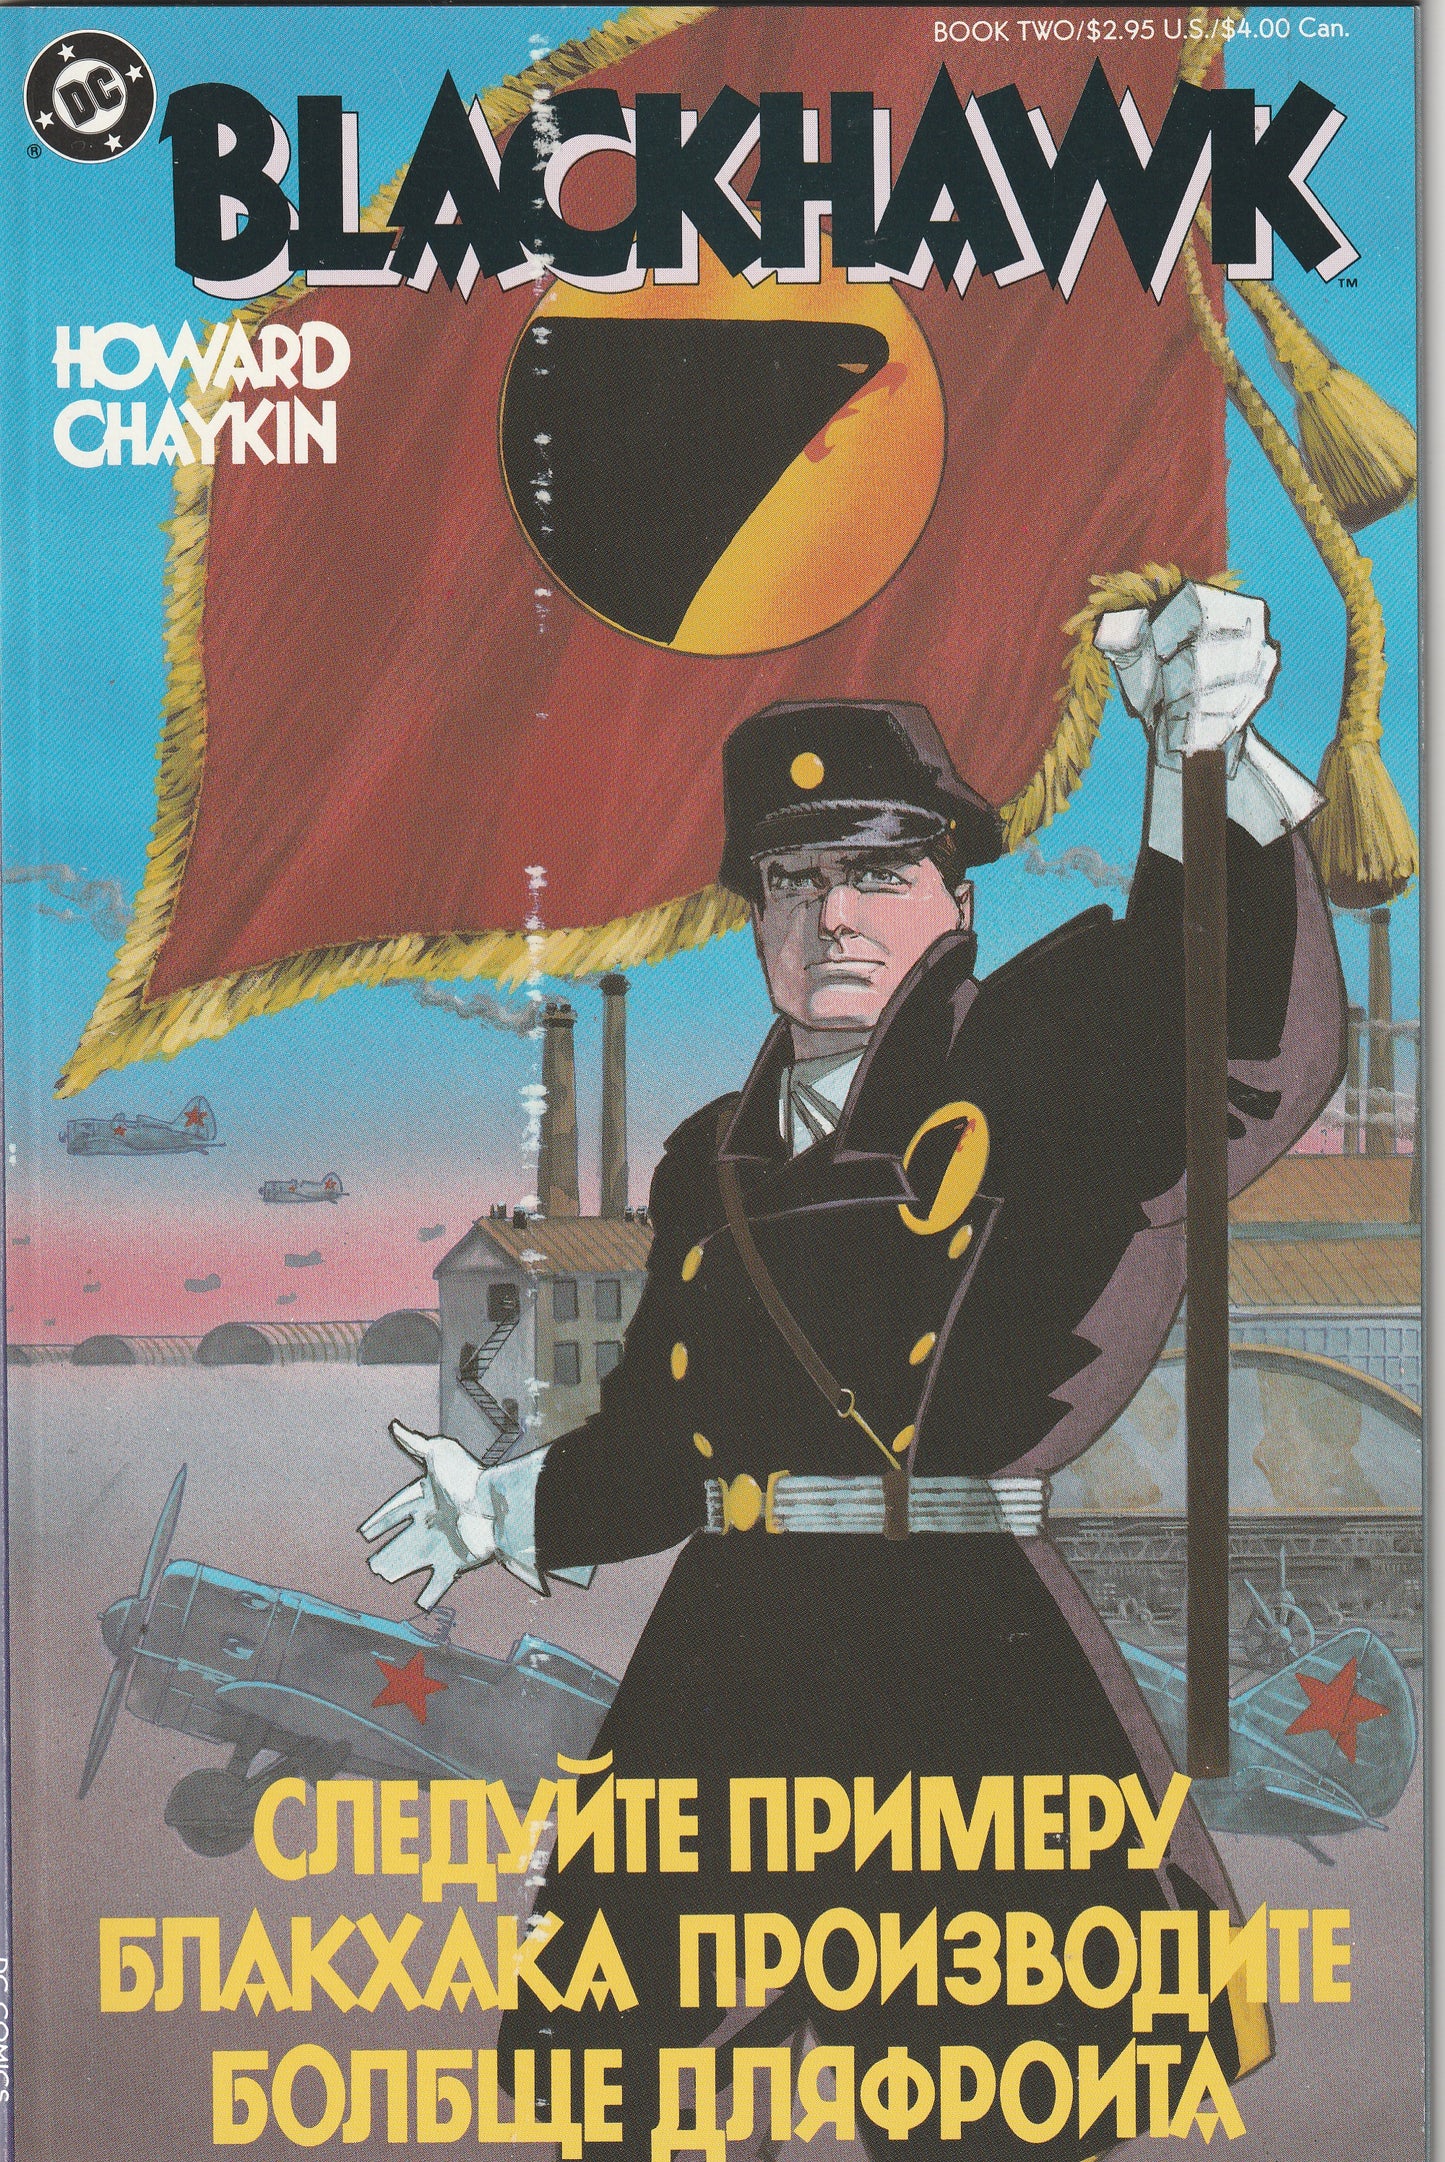 Blackhawk (1988) - Complete 3 issue mini-series - Howard Chaykin story and art